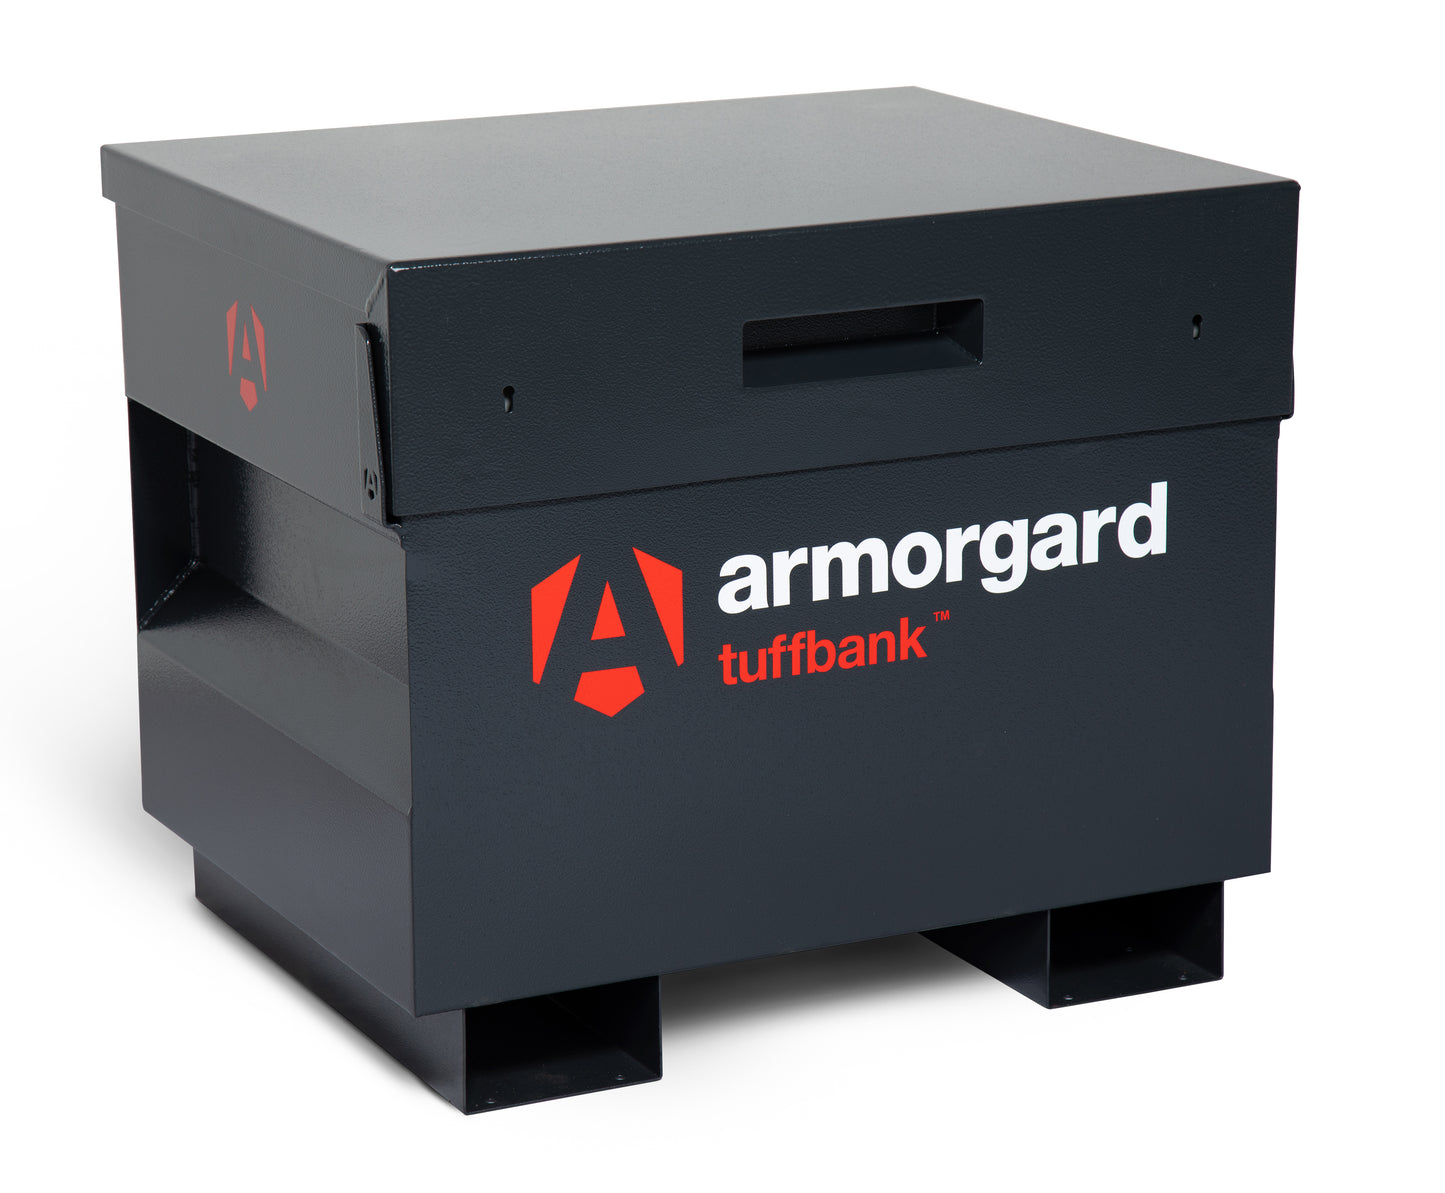 Armorgard - Tuffbank Site Box 760x615x640